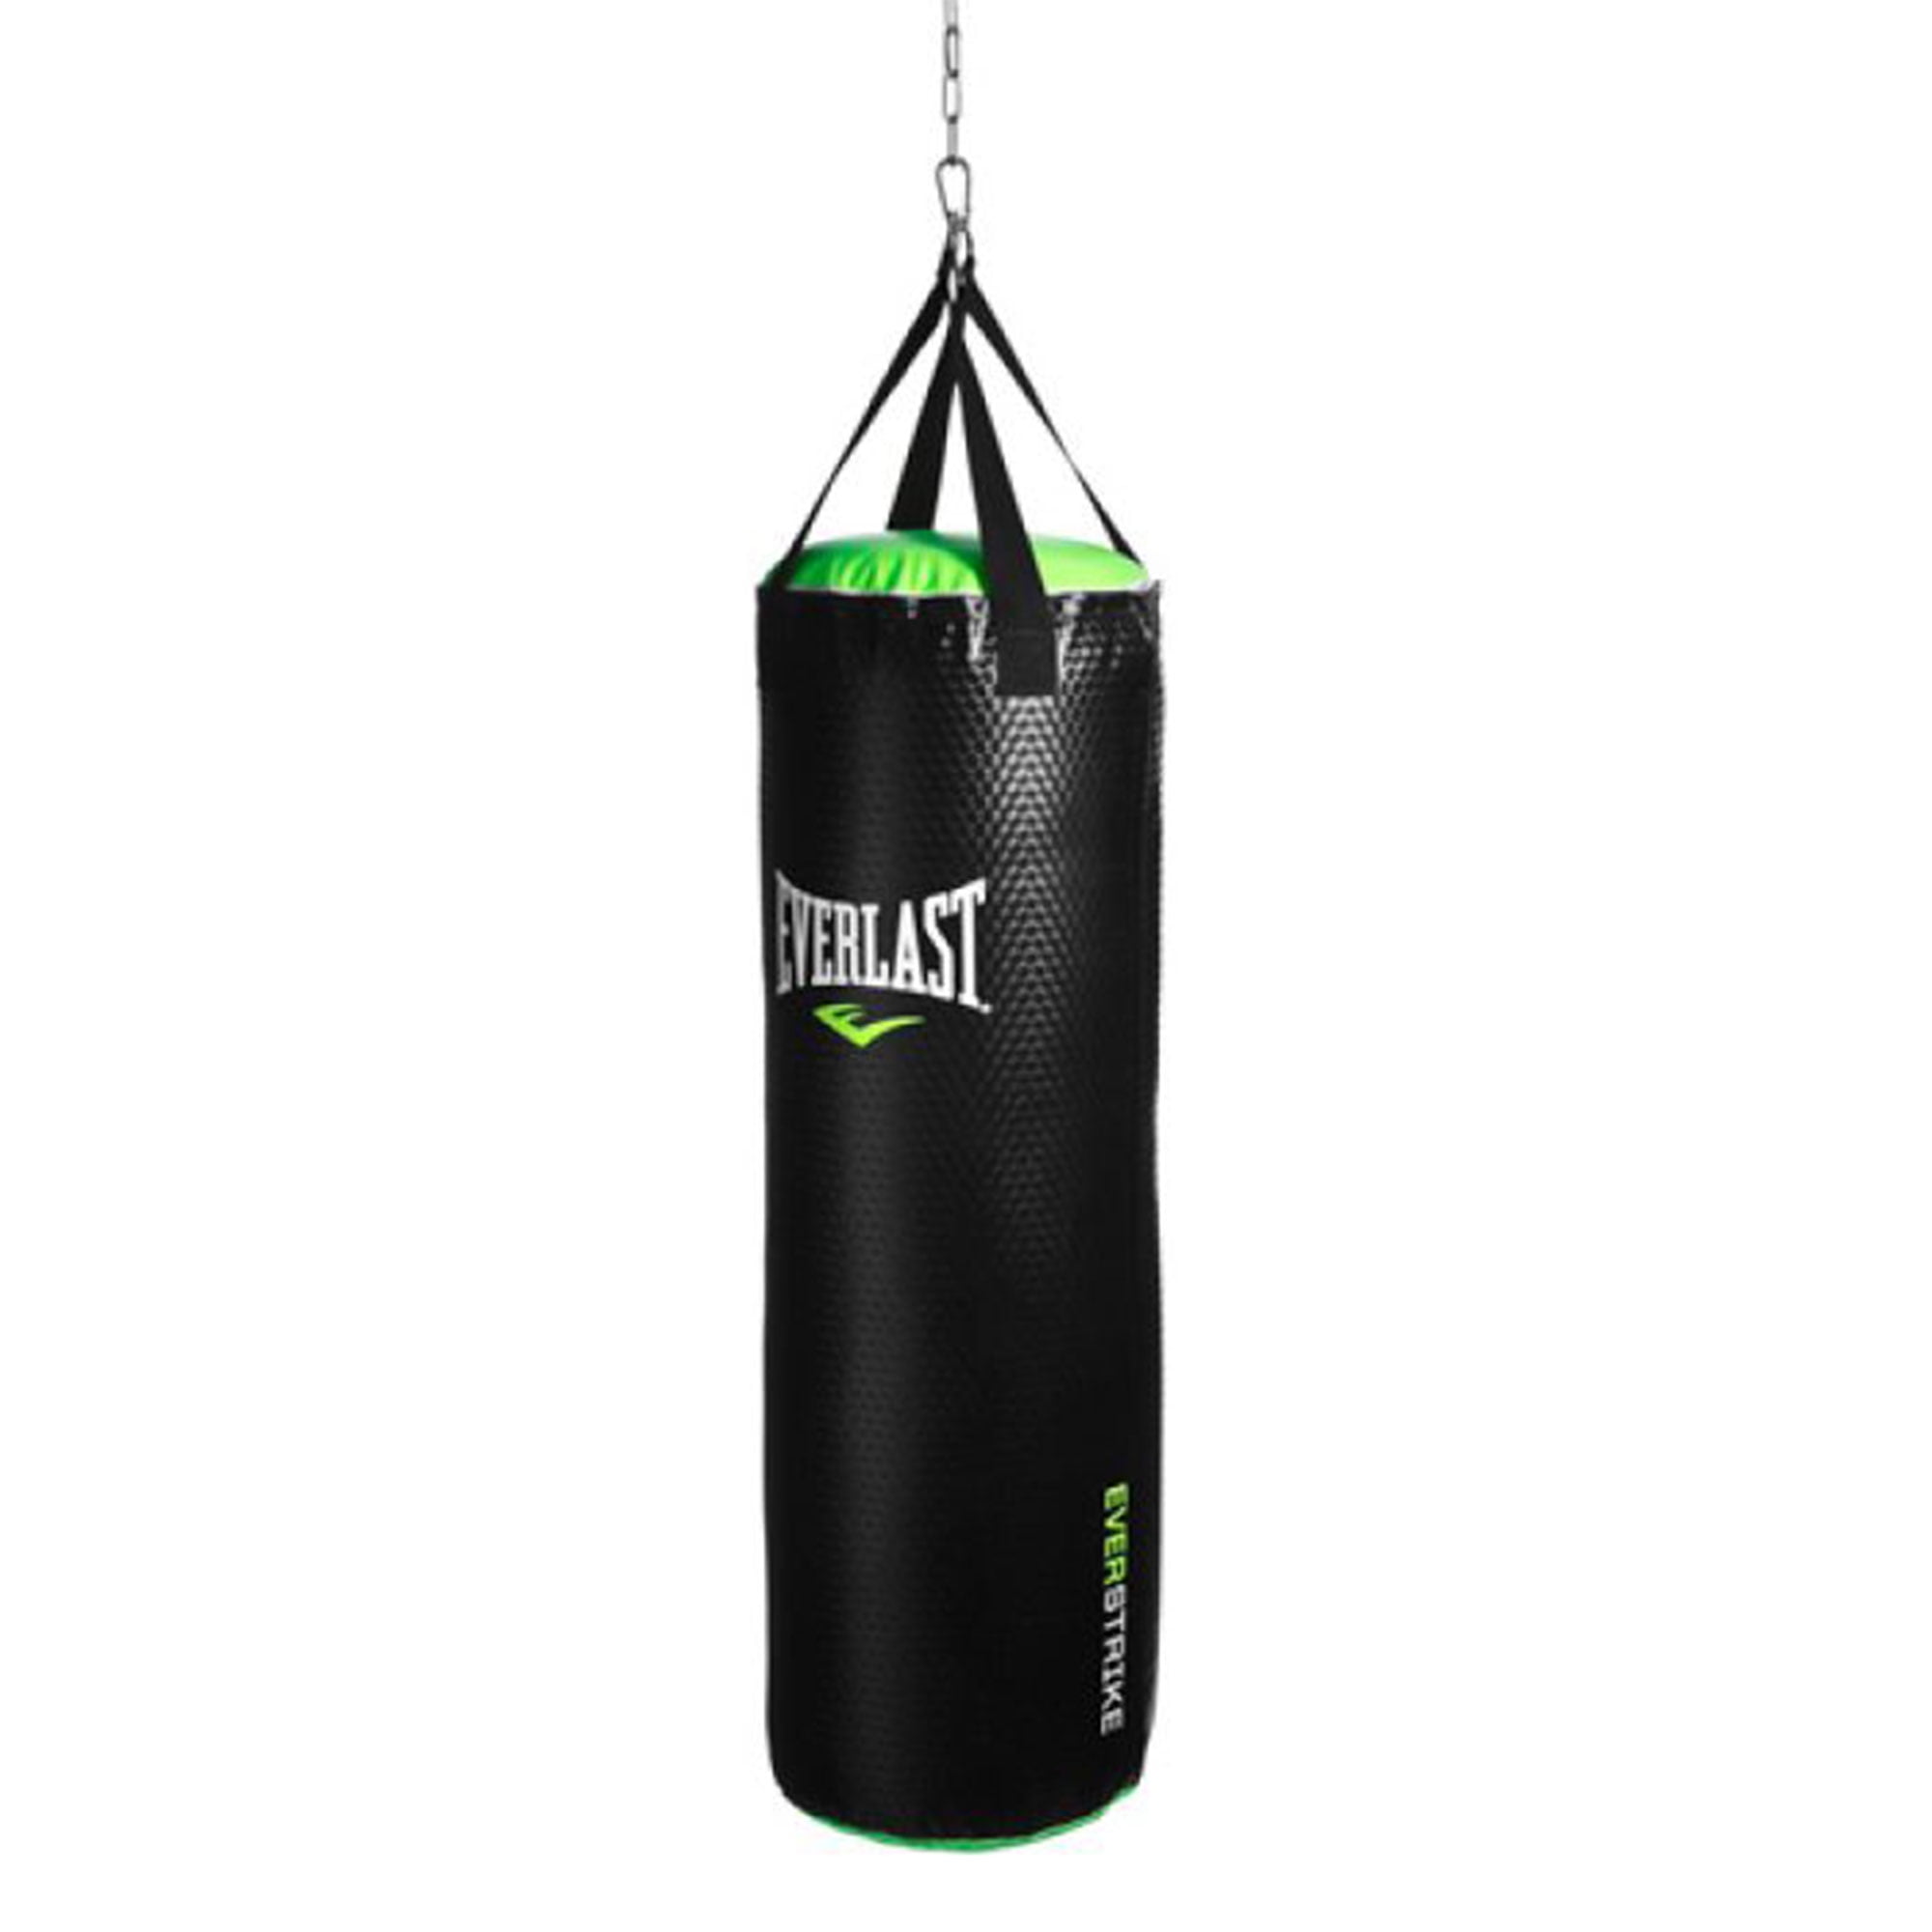 Everlast P00001417 70lb Platinum Heavy Bag Kit for sale online 